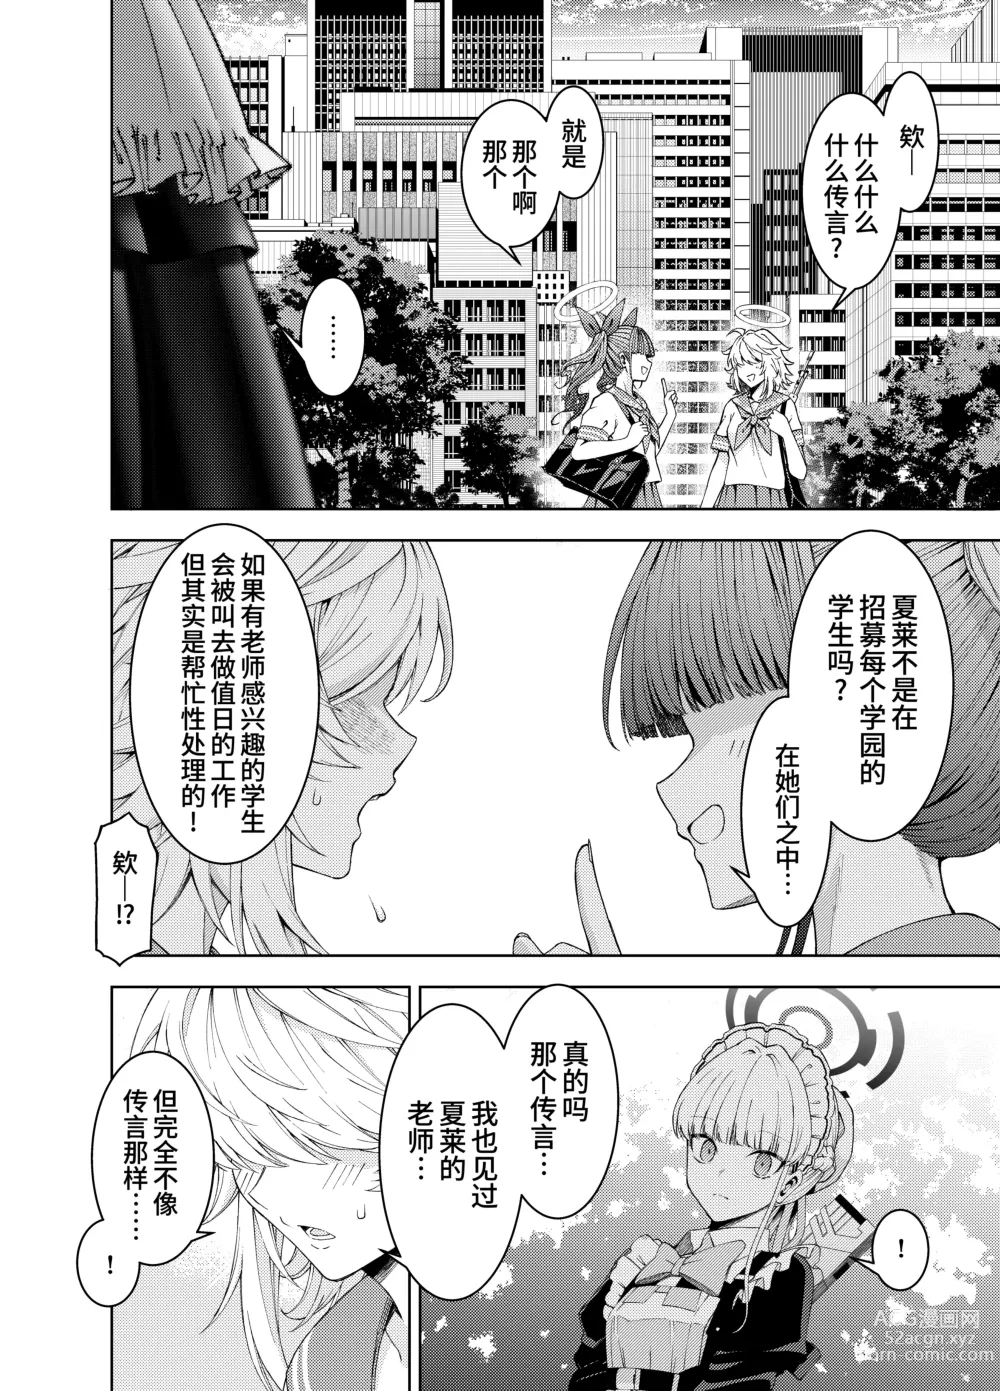 Page 5 of doujinshi 时、时不时